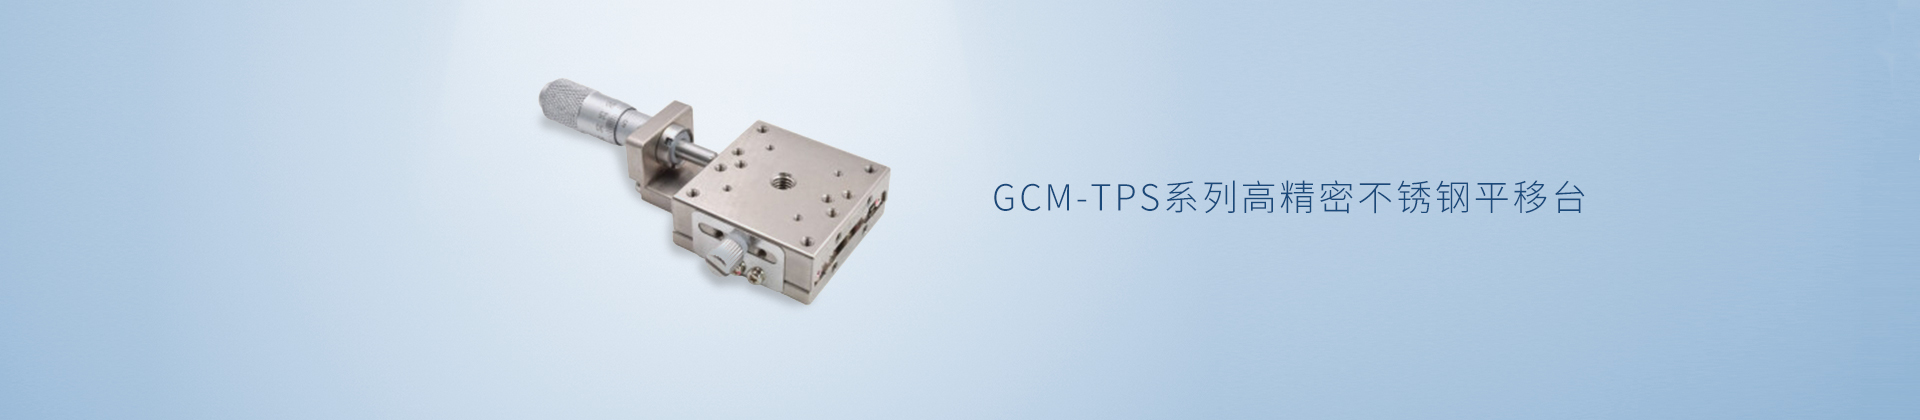 GCM-TPS系列高精密不锈钢平移台